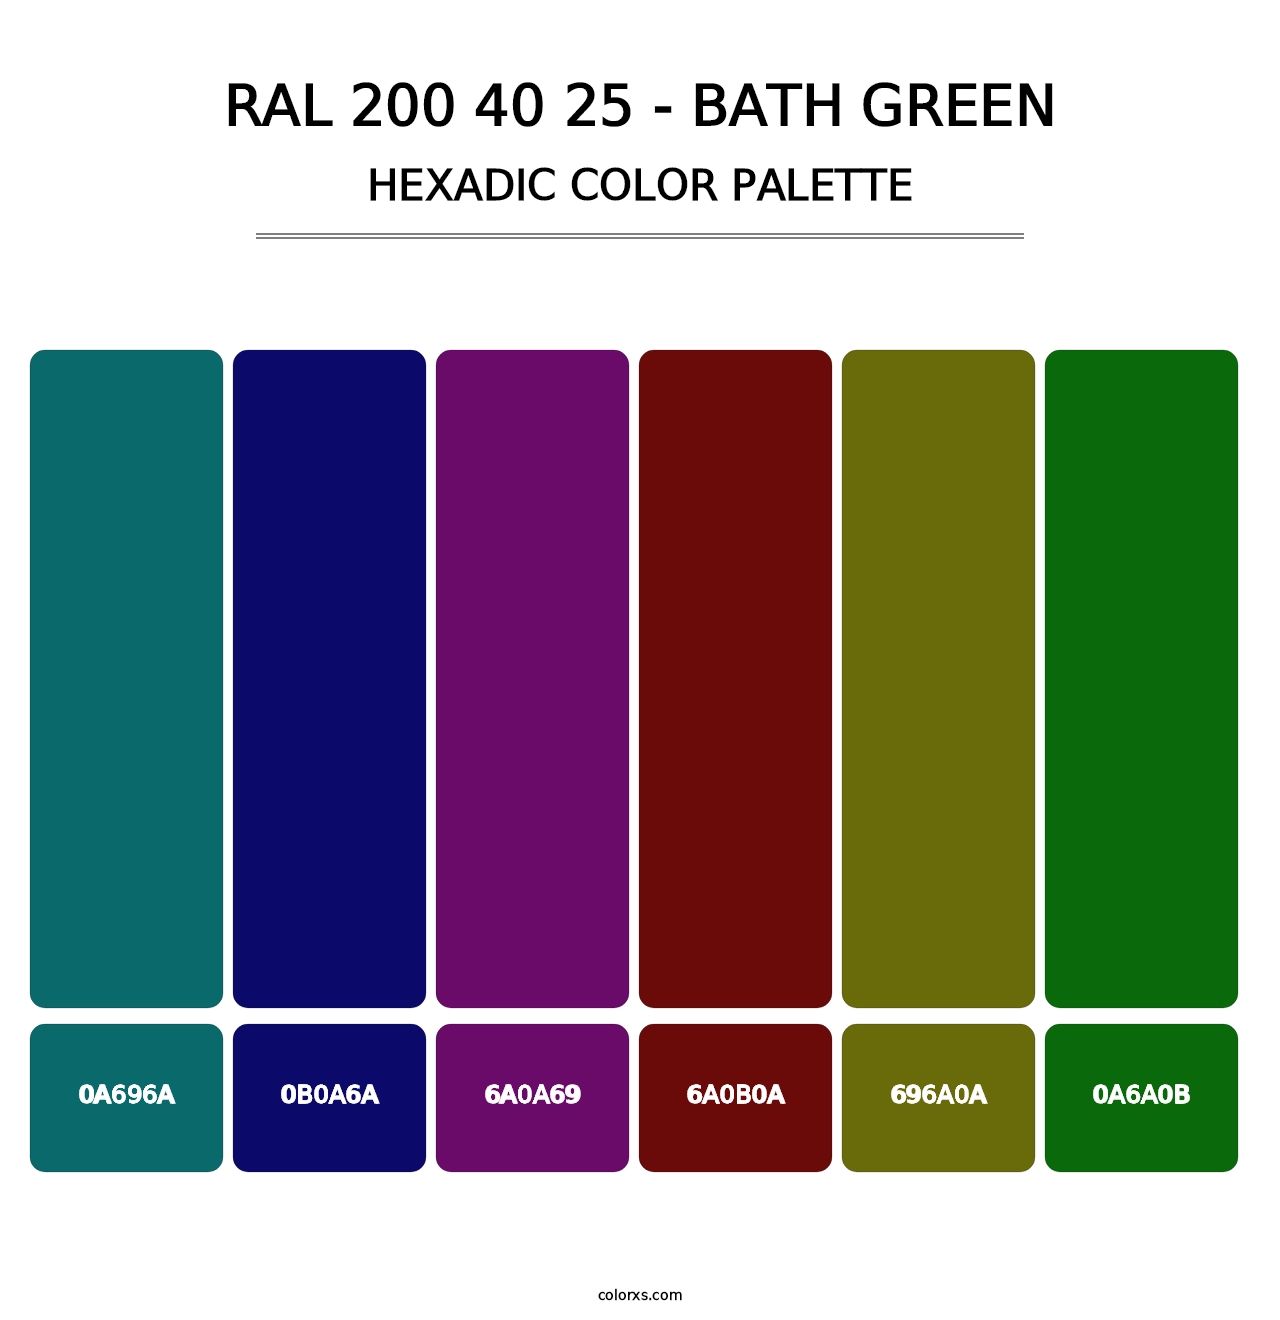 RAL 200 40 25 - Bath Green - Hexadic Color Palette